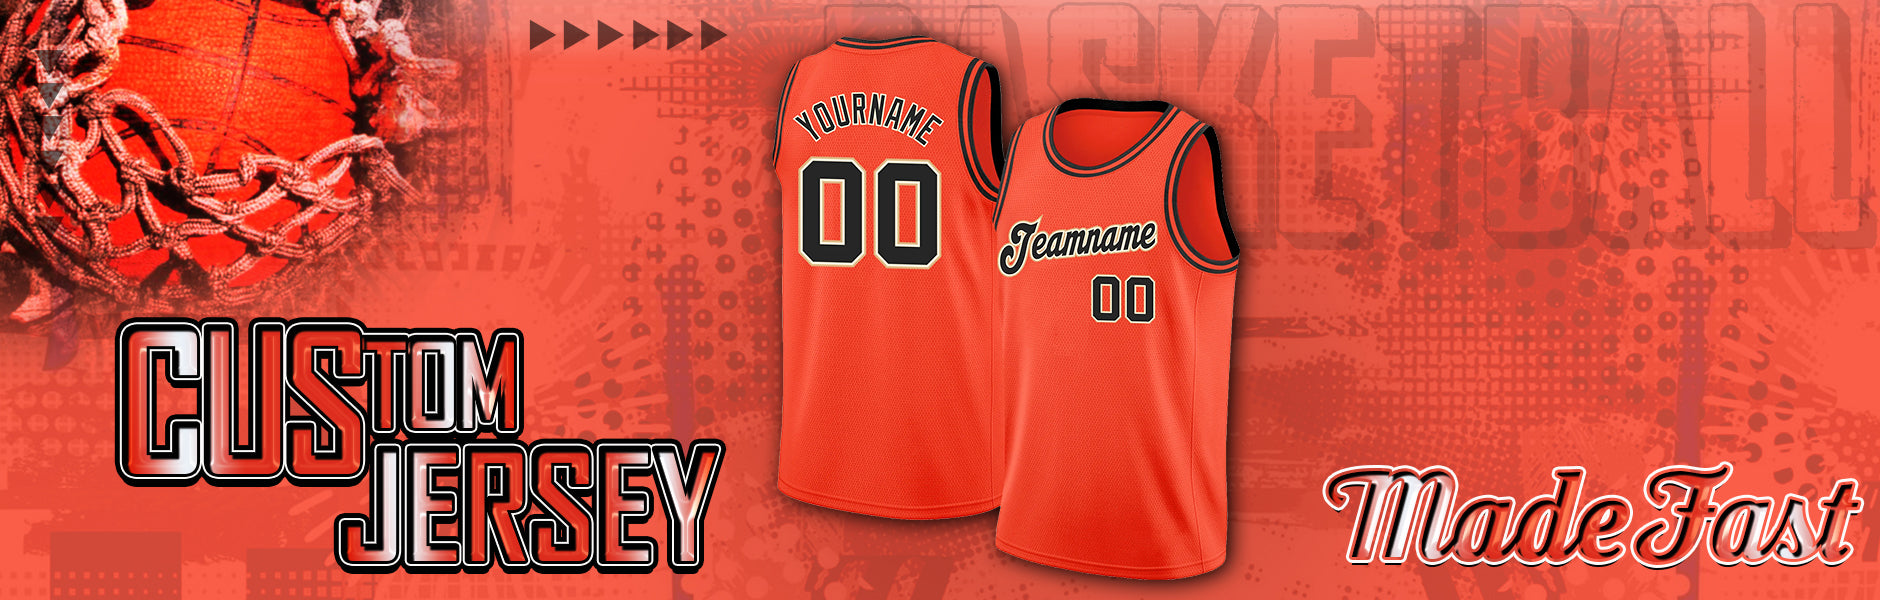 custom basketball orange jersey